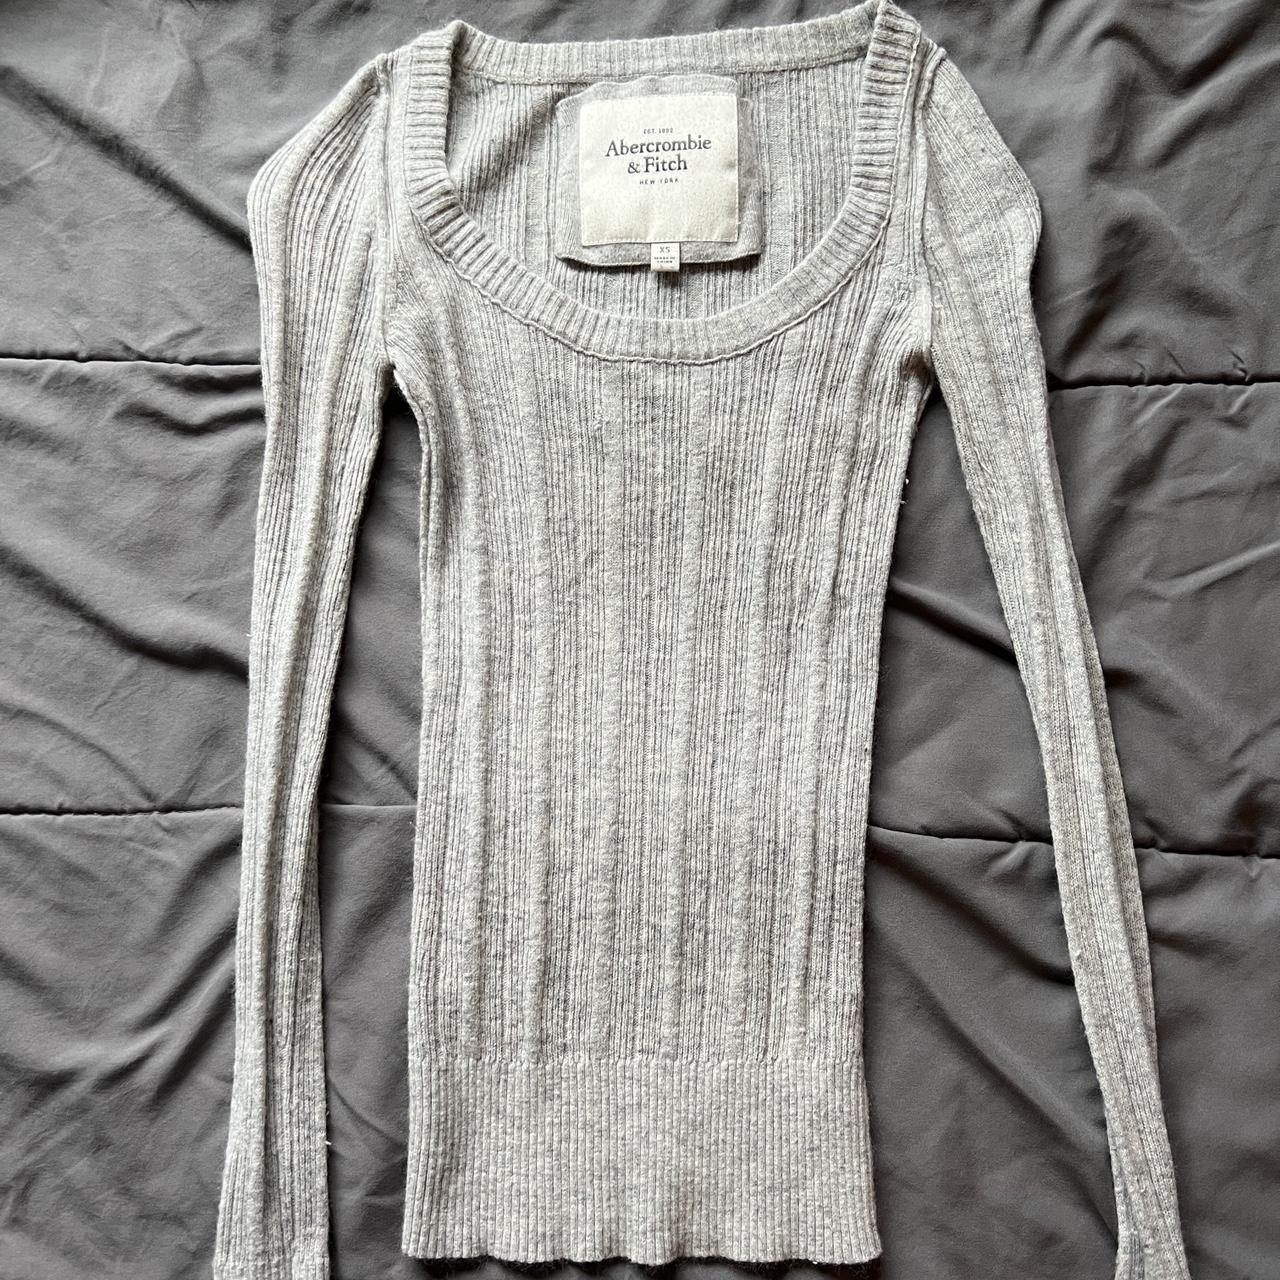 Abercrombie & Fitch Women's Grey Shirt